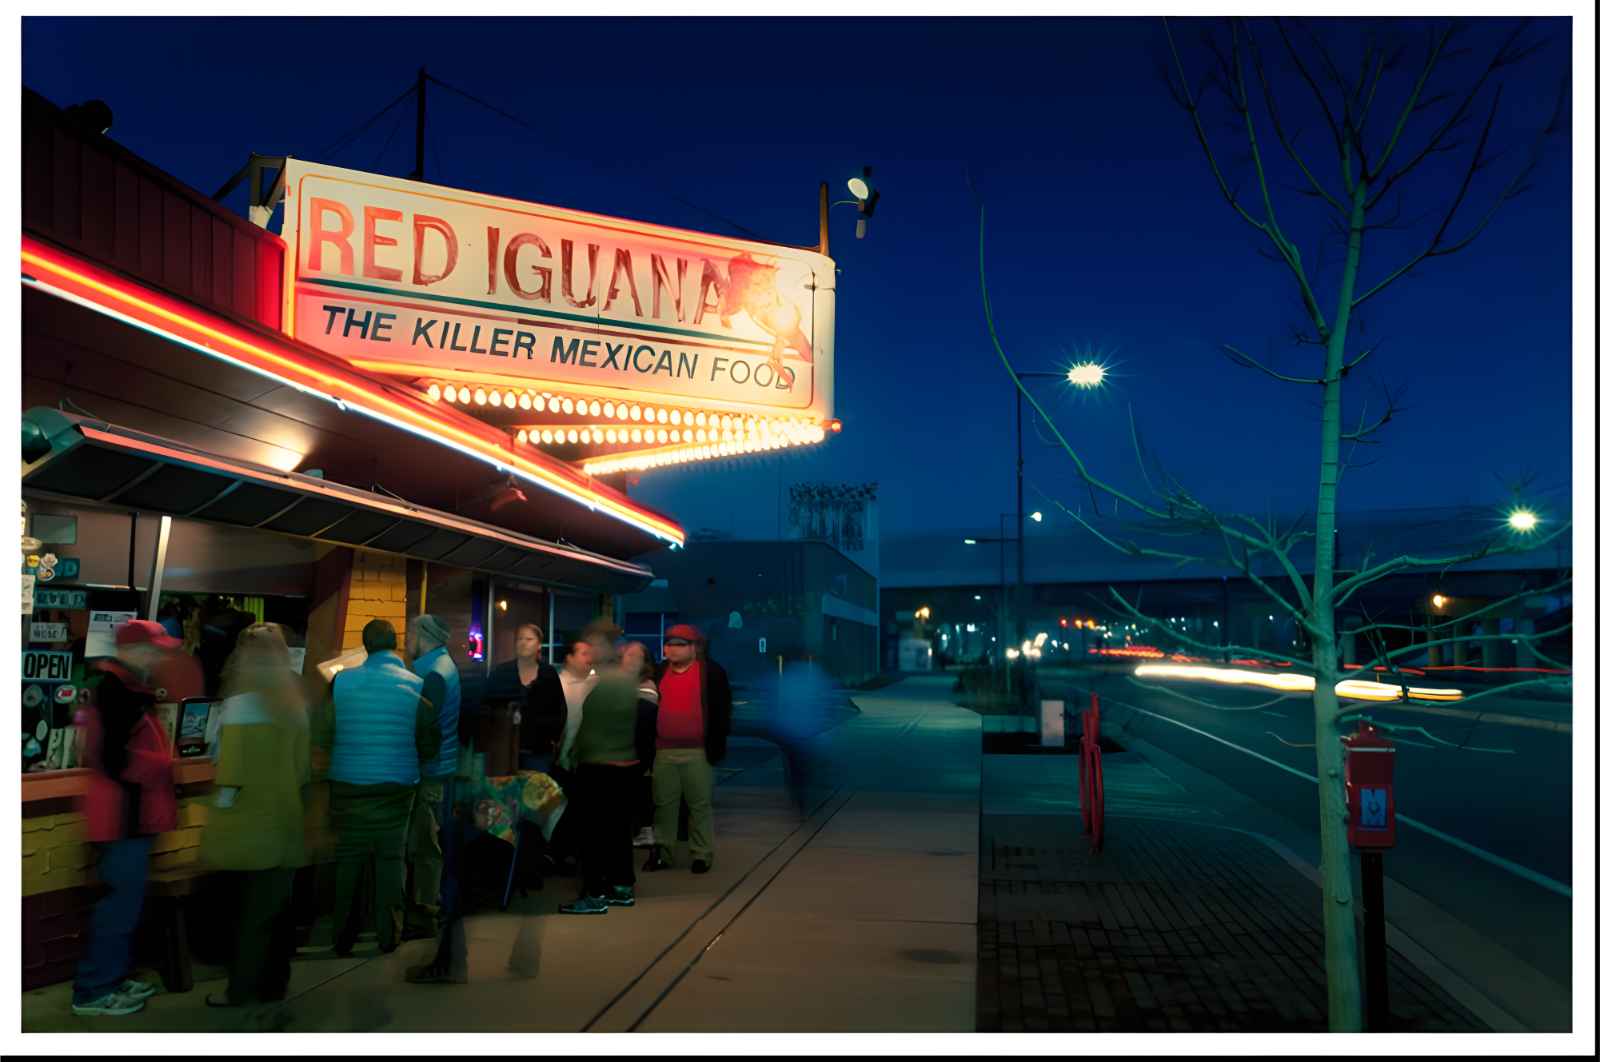 Things to do in Salt Lake City - Red Iguana